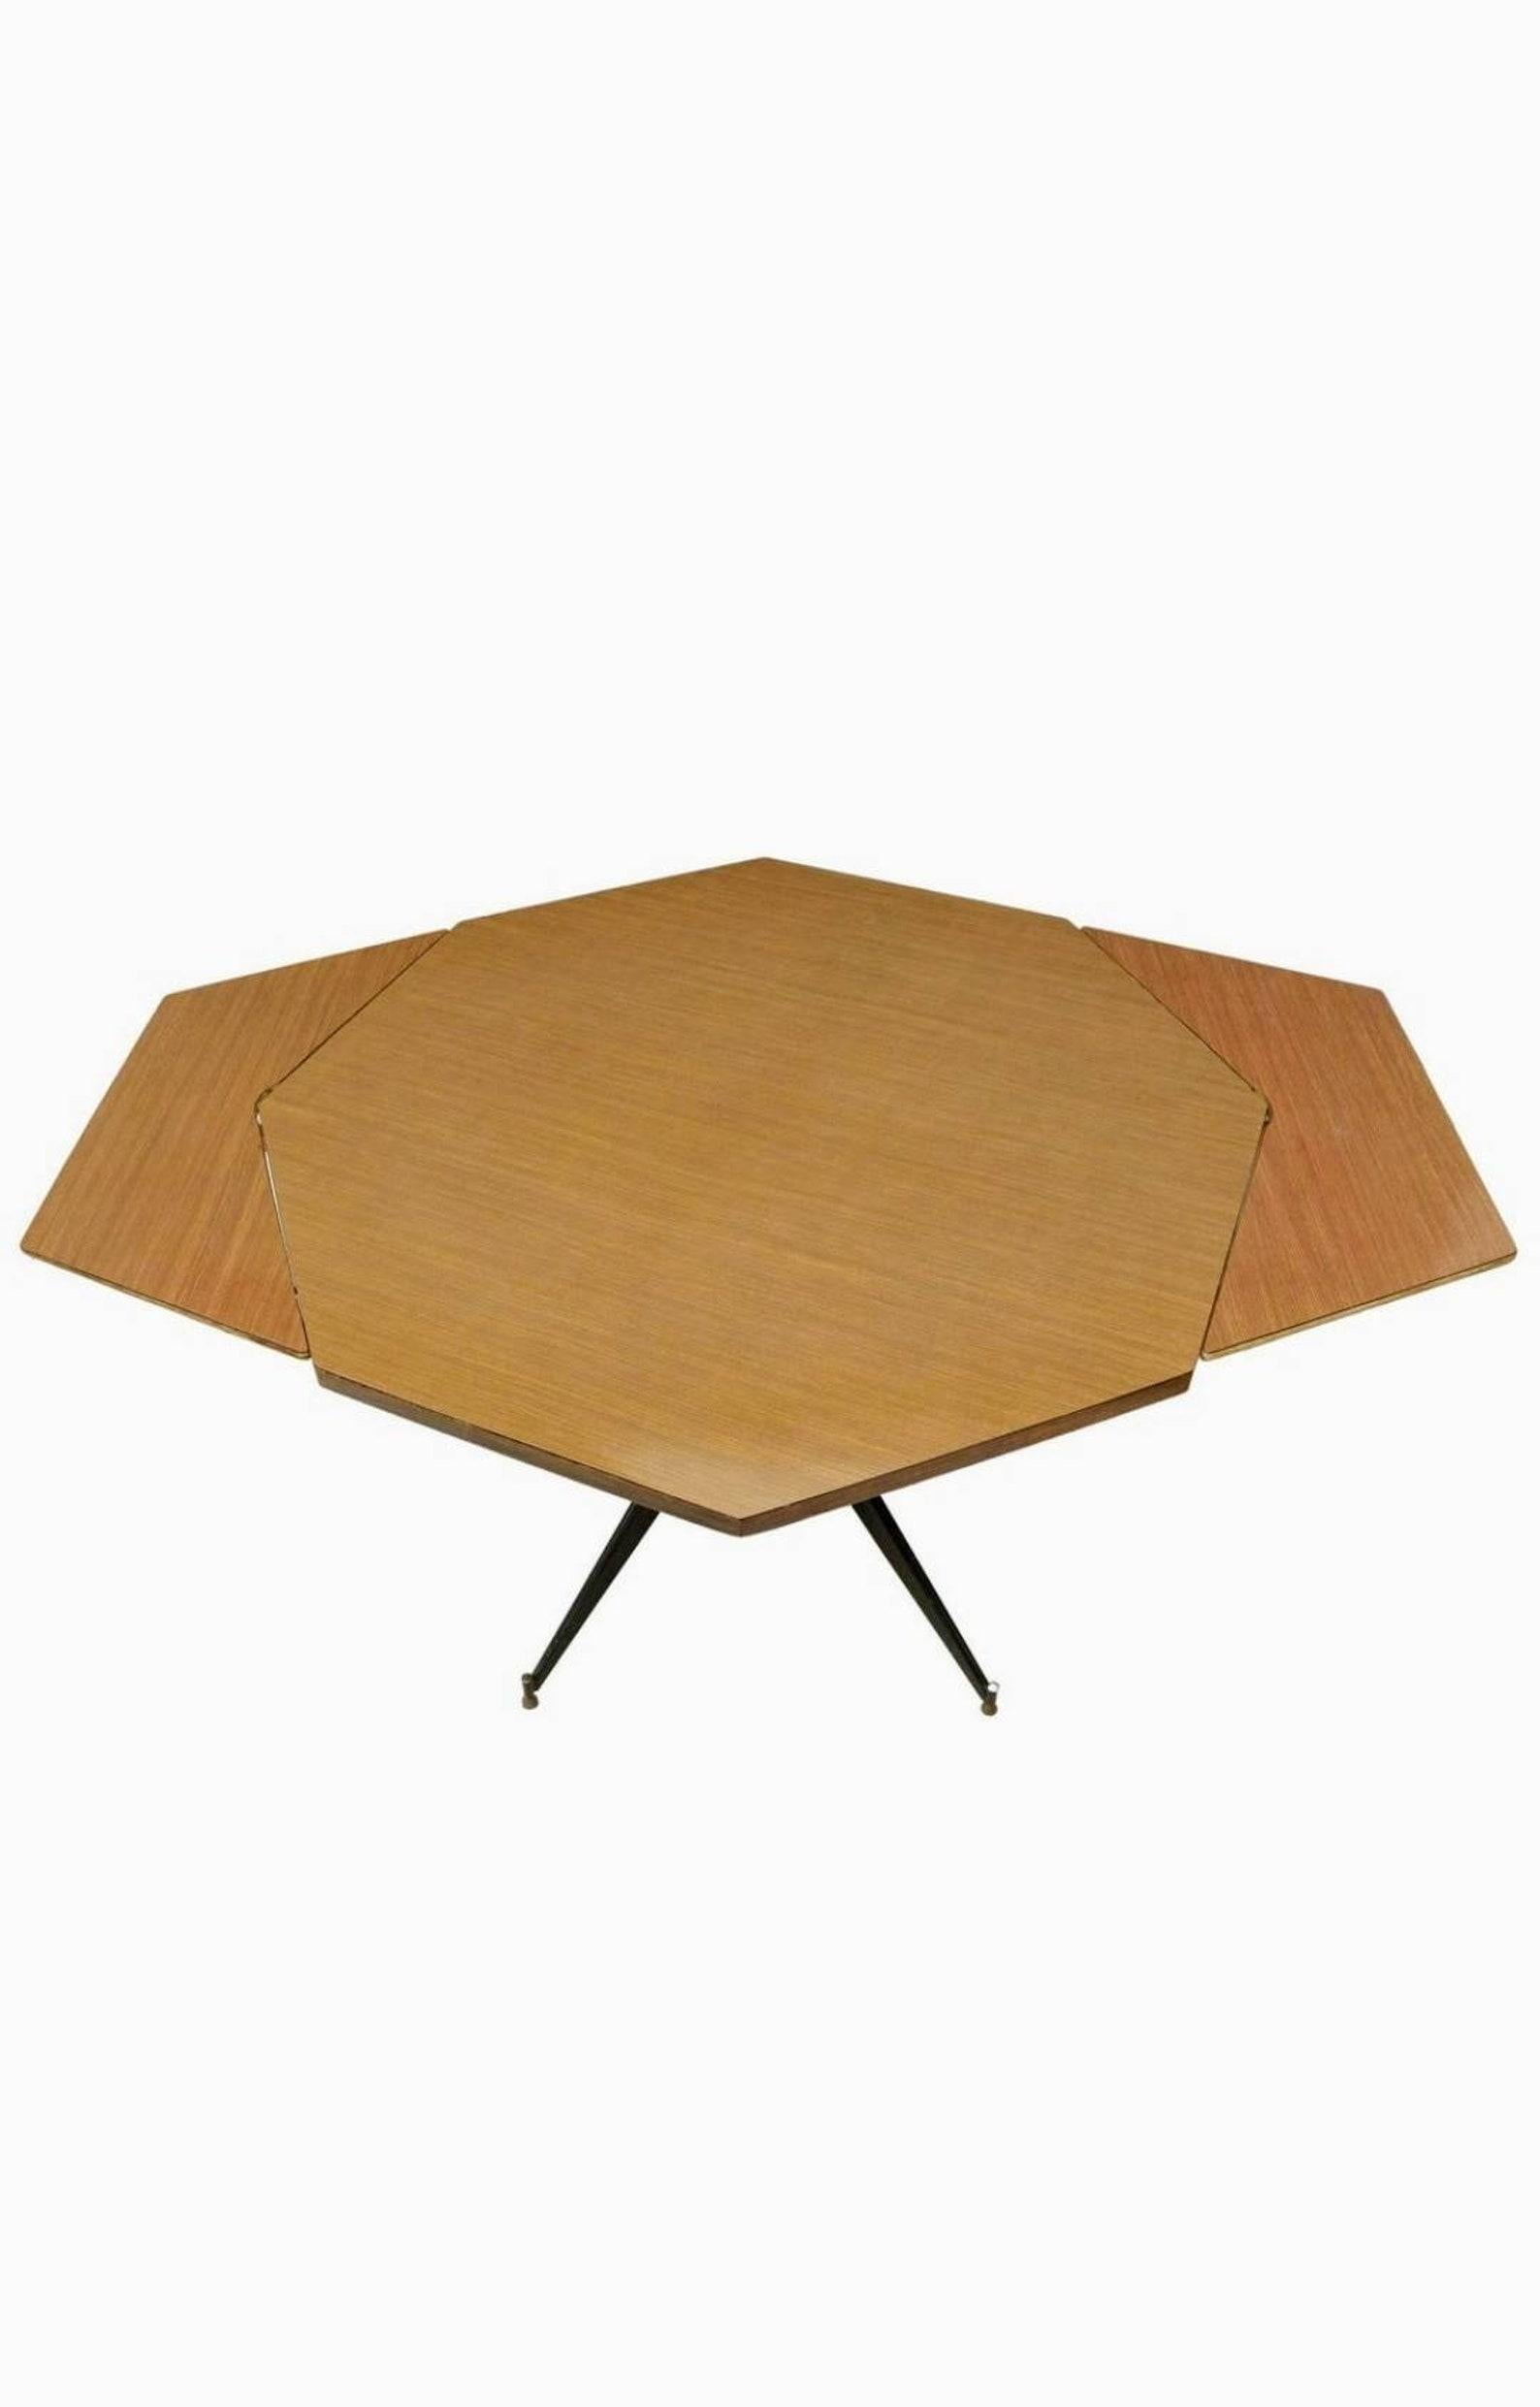 Italian Mid-Century Modern Carlo Ratti Attributed Angular Table For Sale 1